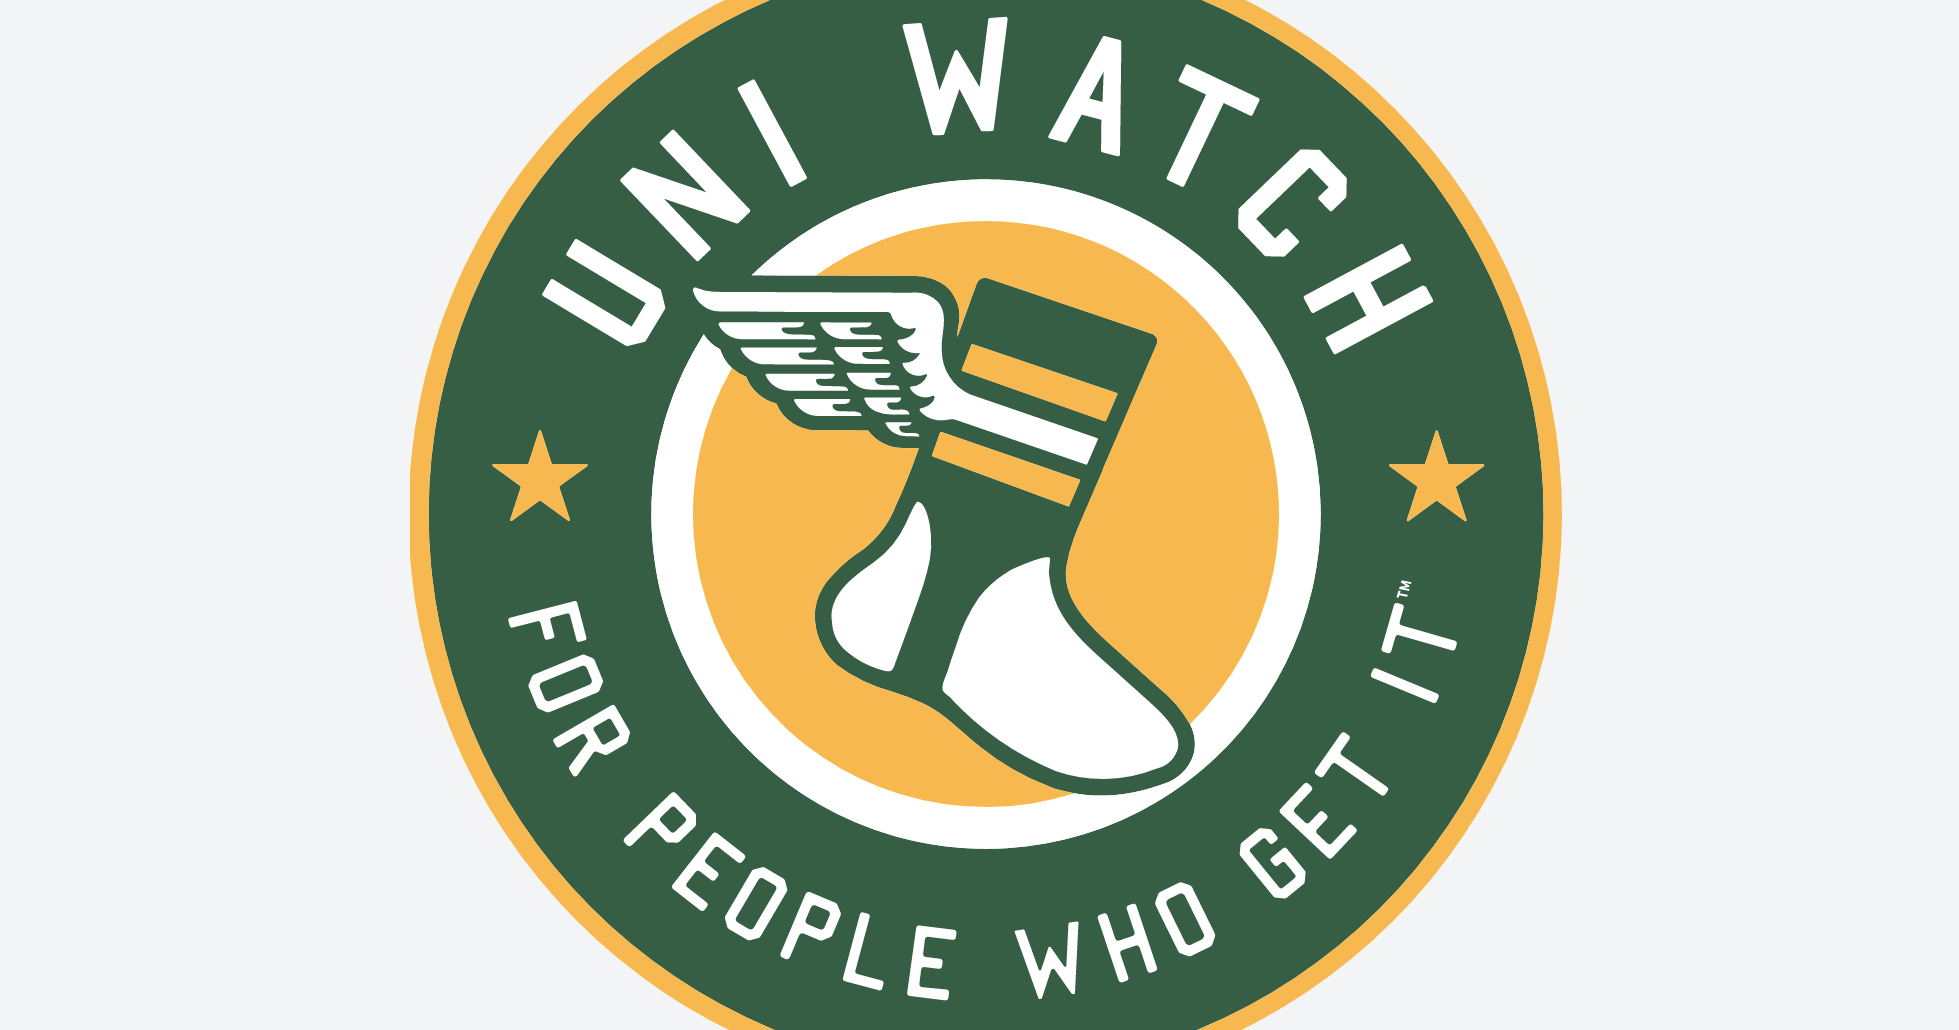 (c) Uni-watch.com